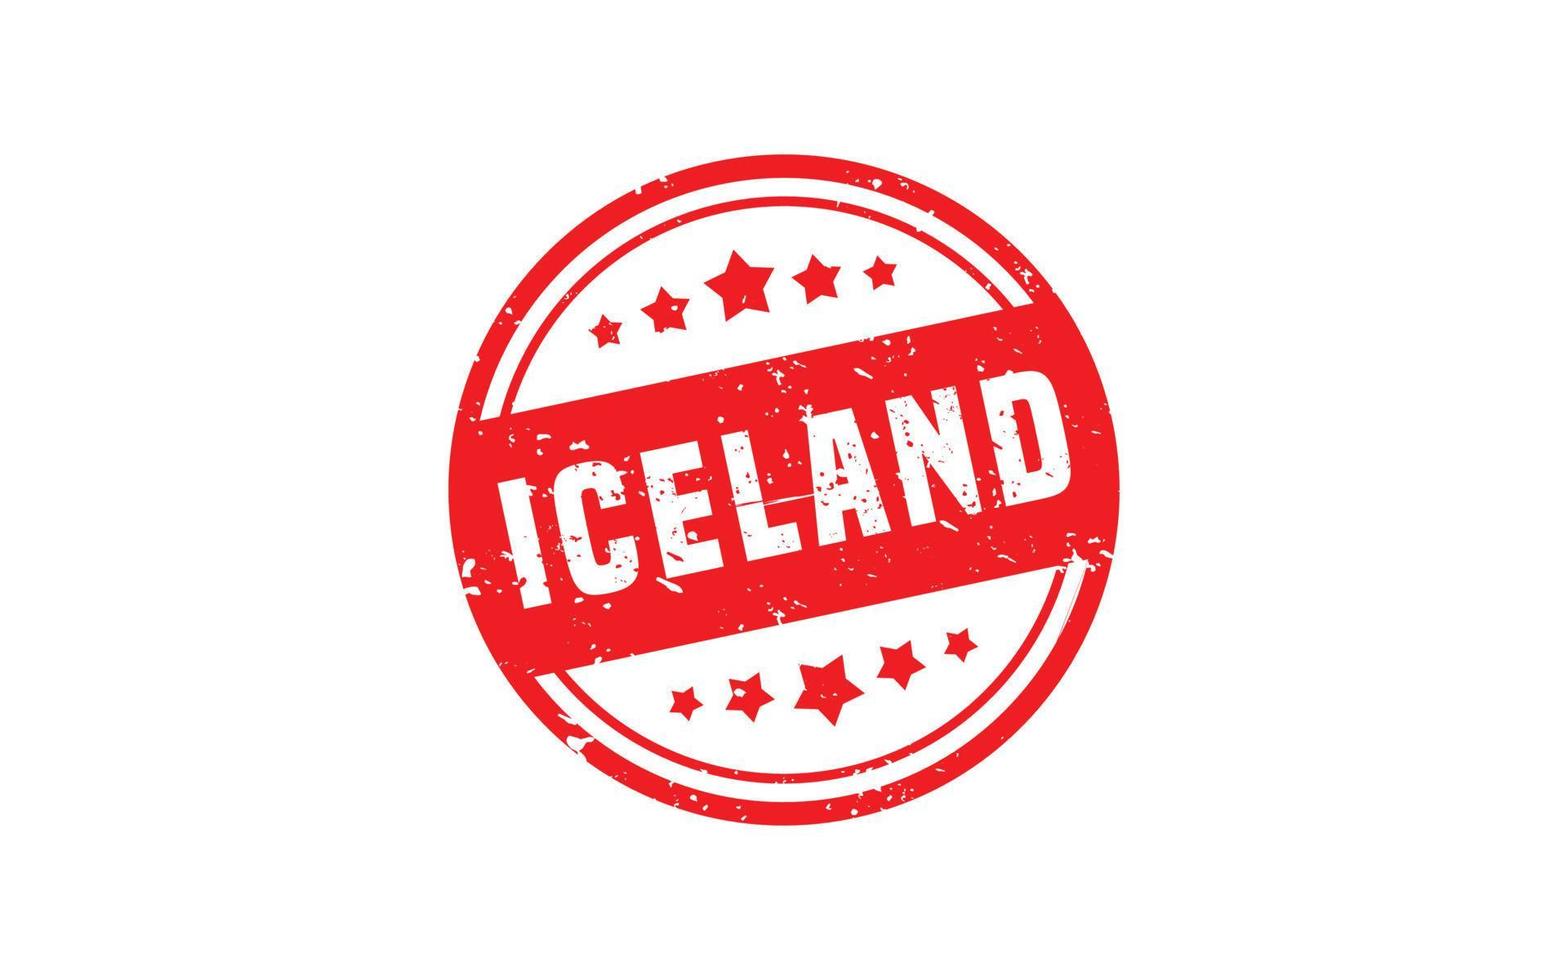 Goma de sello de islandia con estilo grunge sobre fondo blanco vector